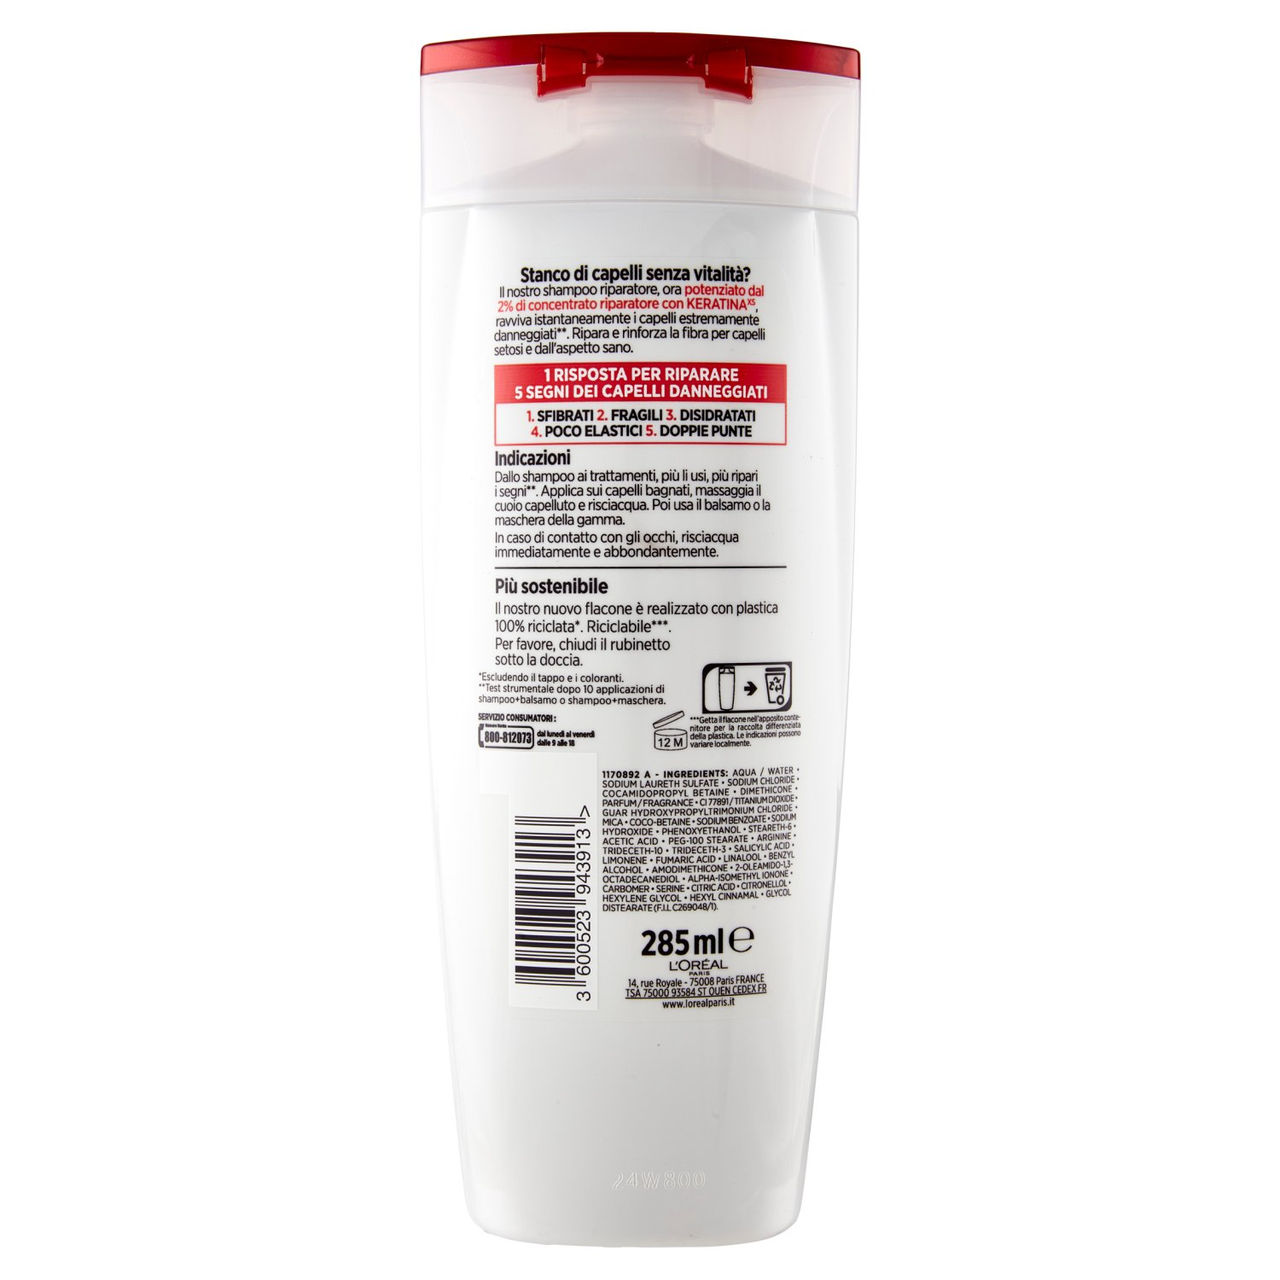 Shampoo Elvive Total Repair 5 in vendita online